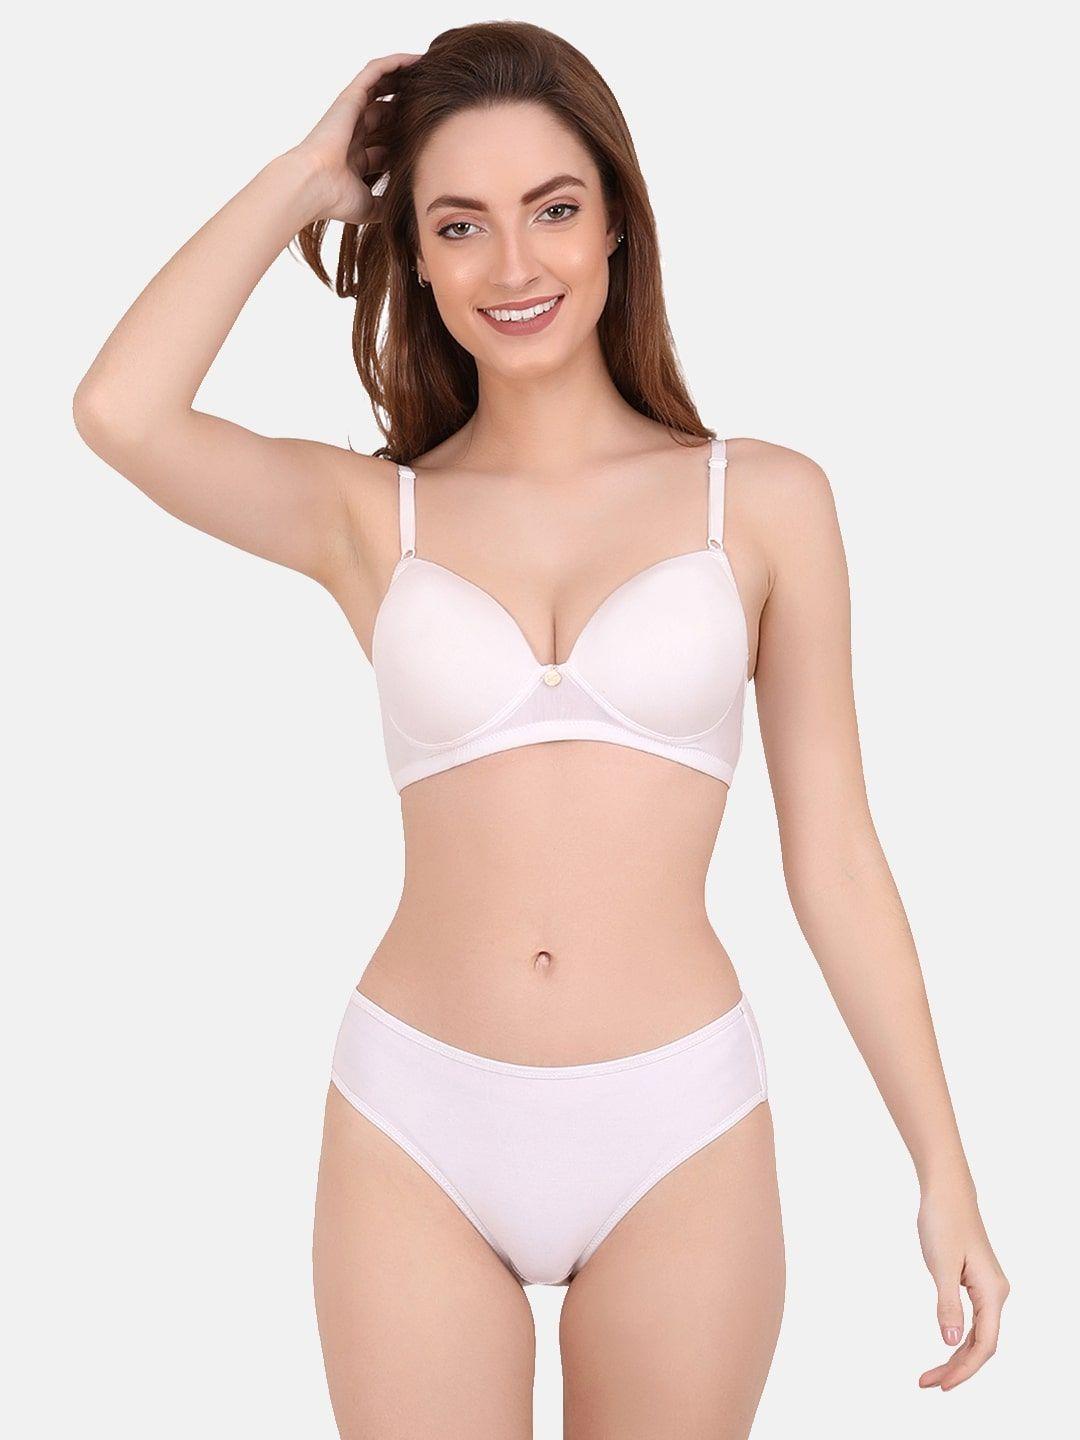 curwish-women-white-solid-lingerie-set-mtsw002